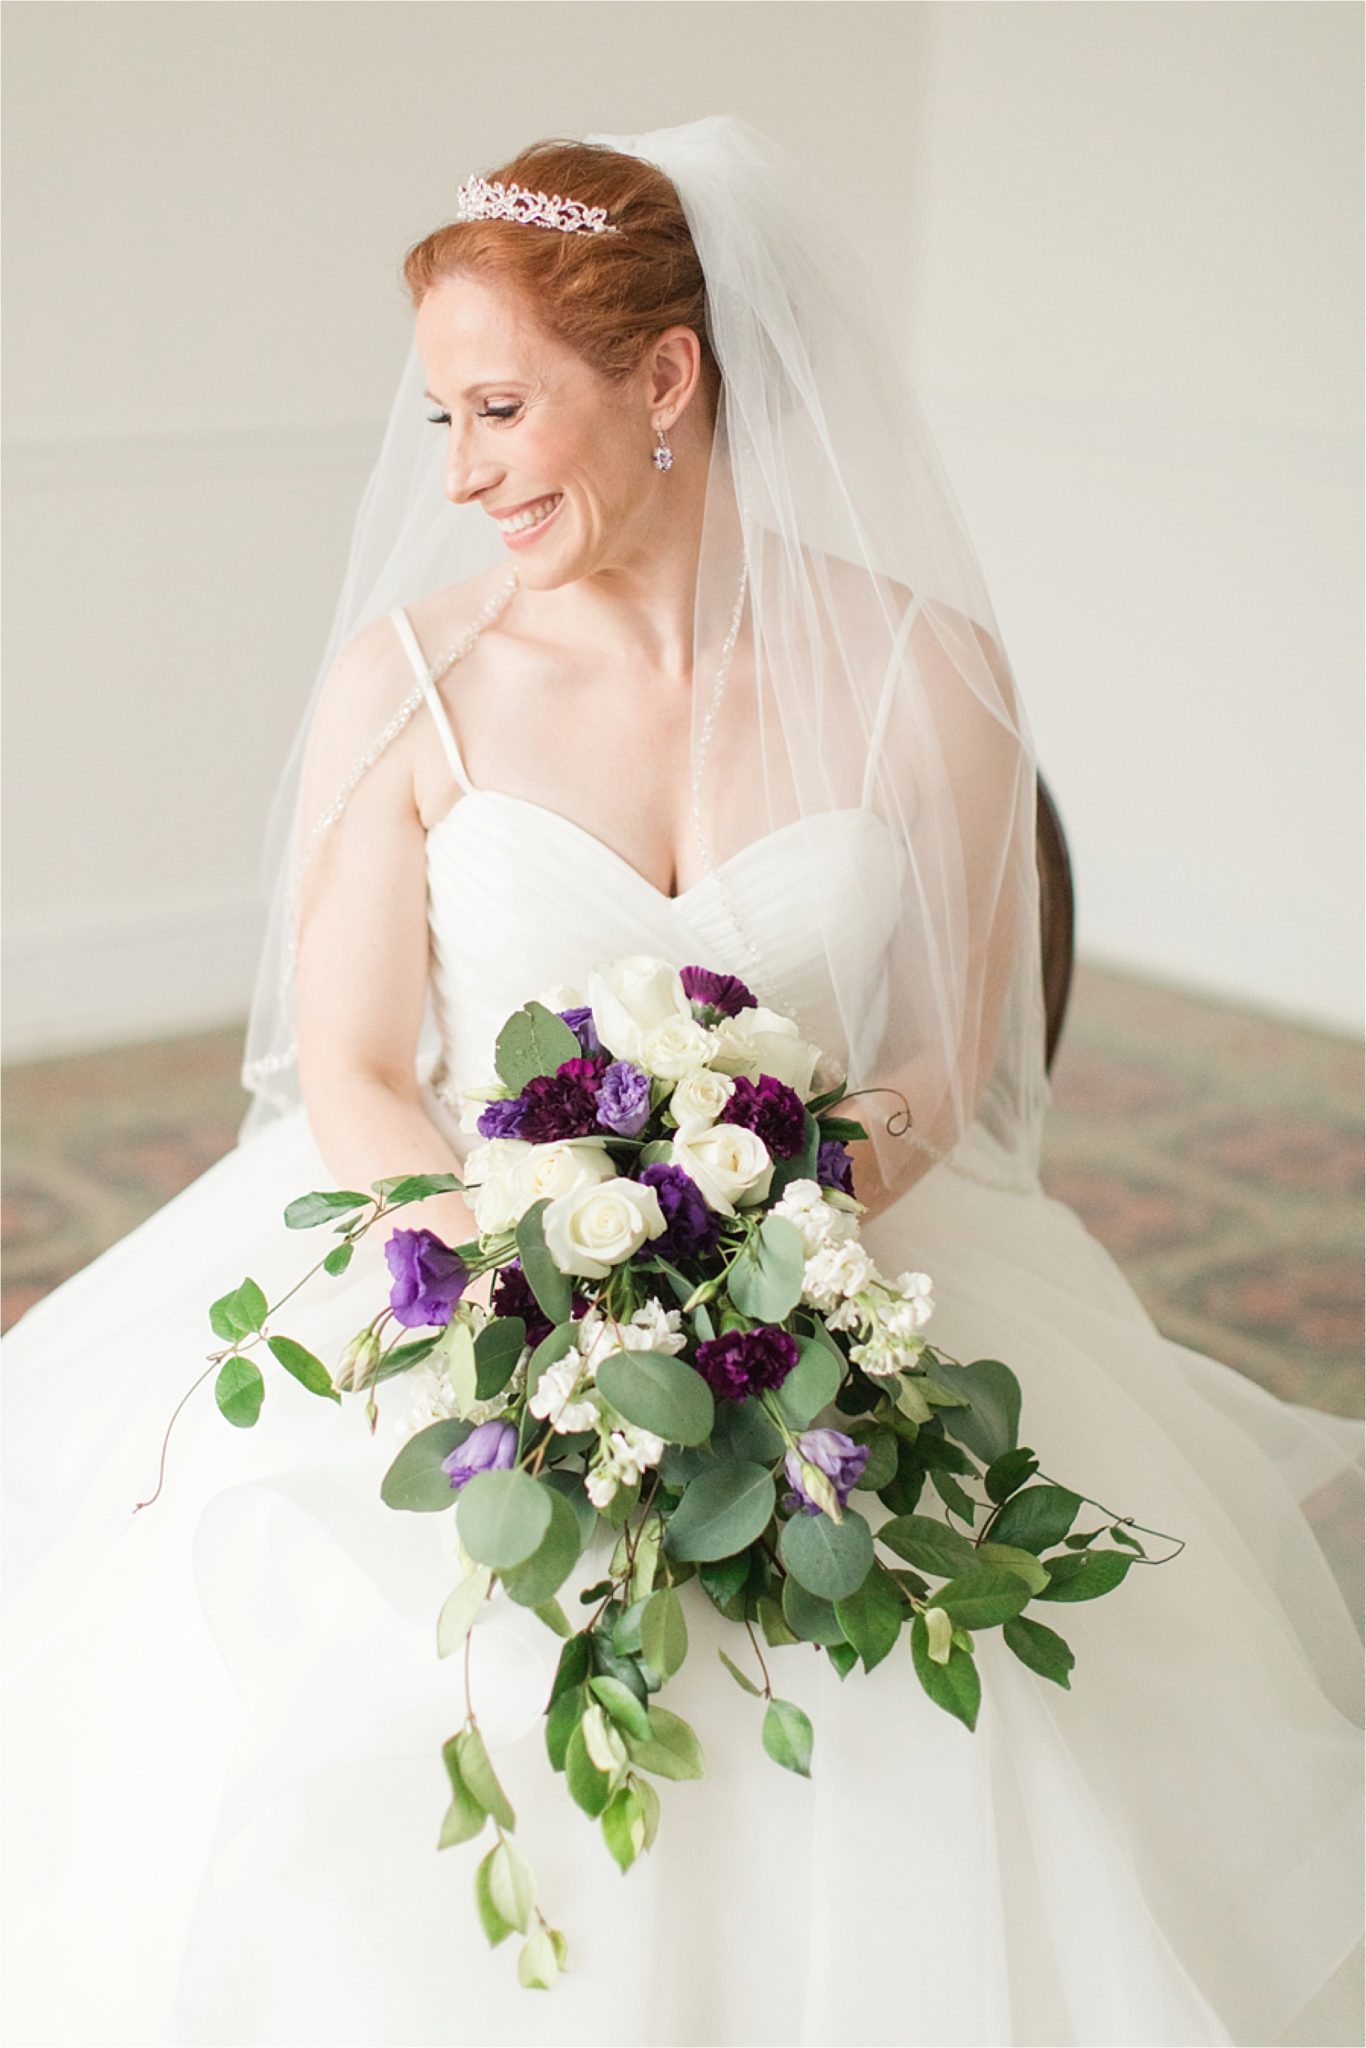 Bridal Session at The Pillars of Mobile-Mobile Alabama Wedding Photographer-Sarra-Bridal session-Wedding dress-Bridal bouquet 